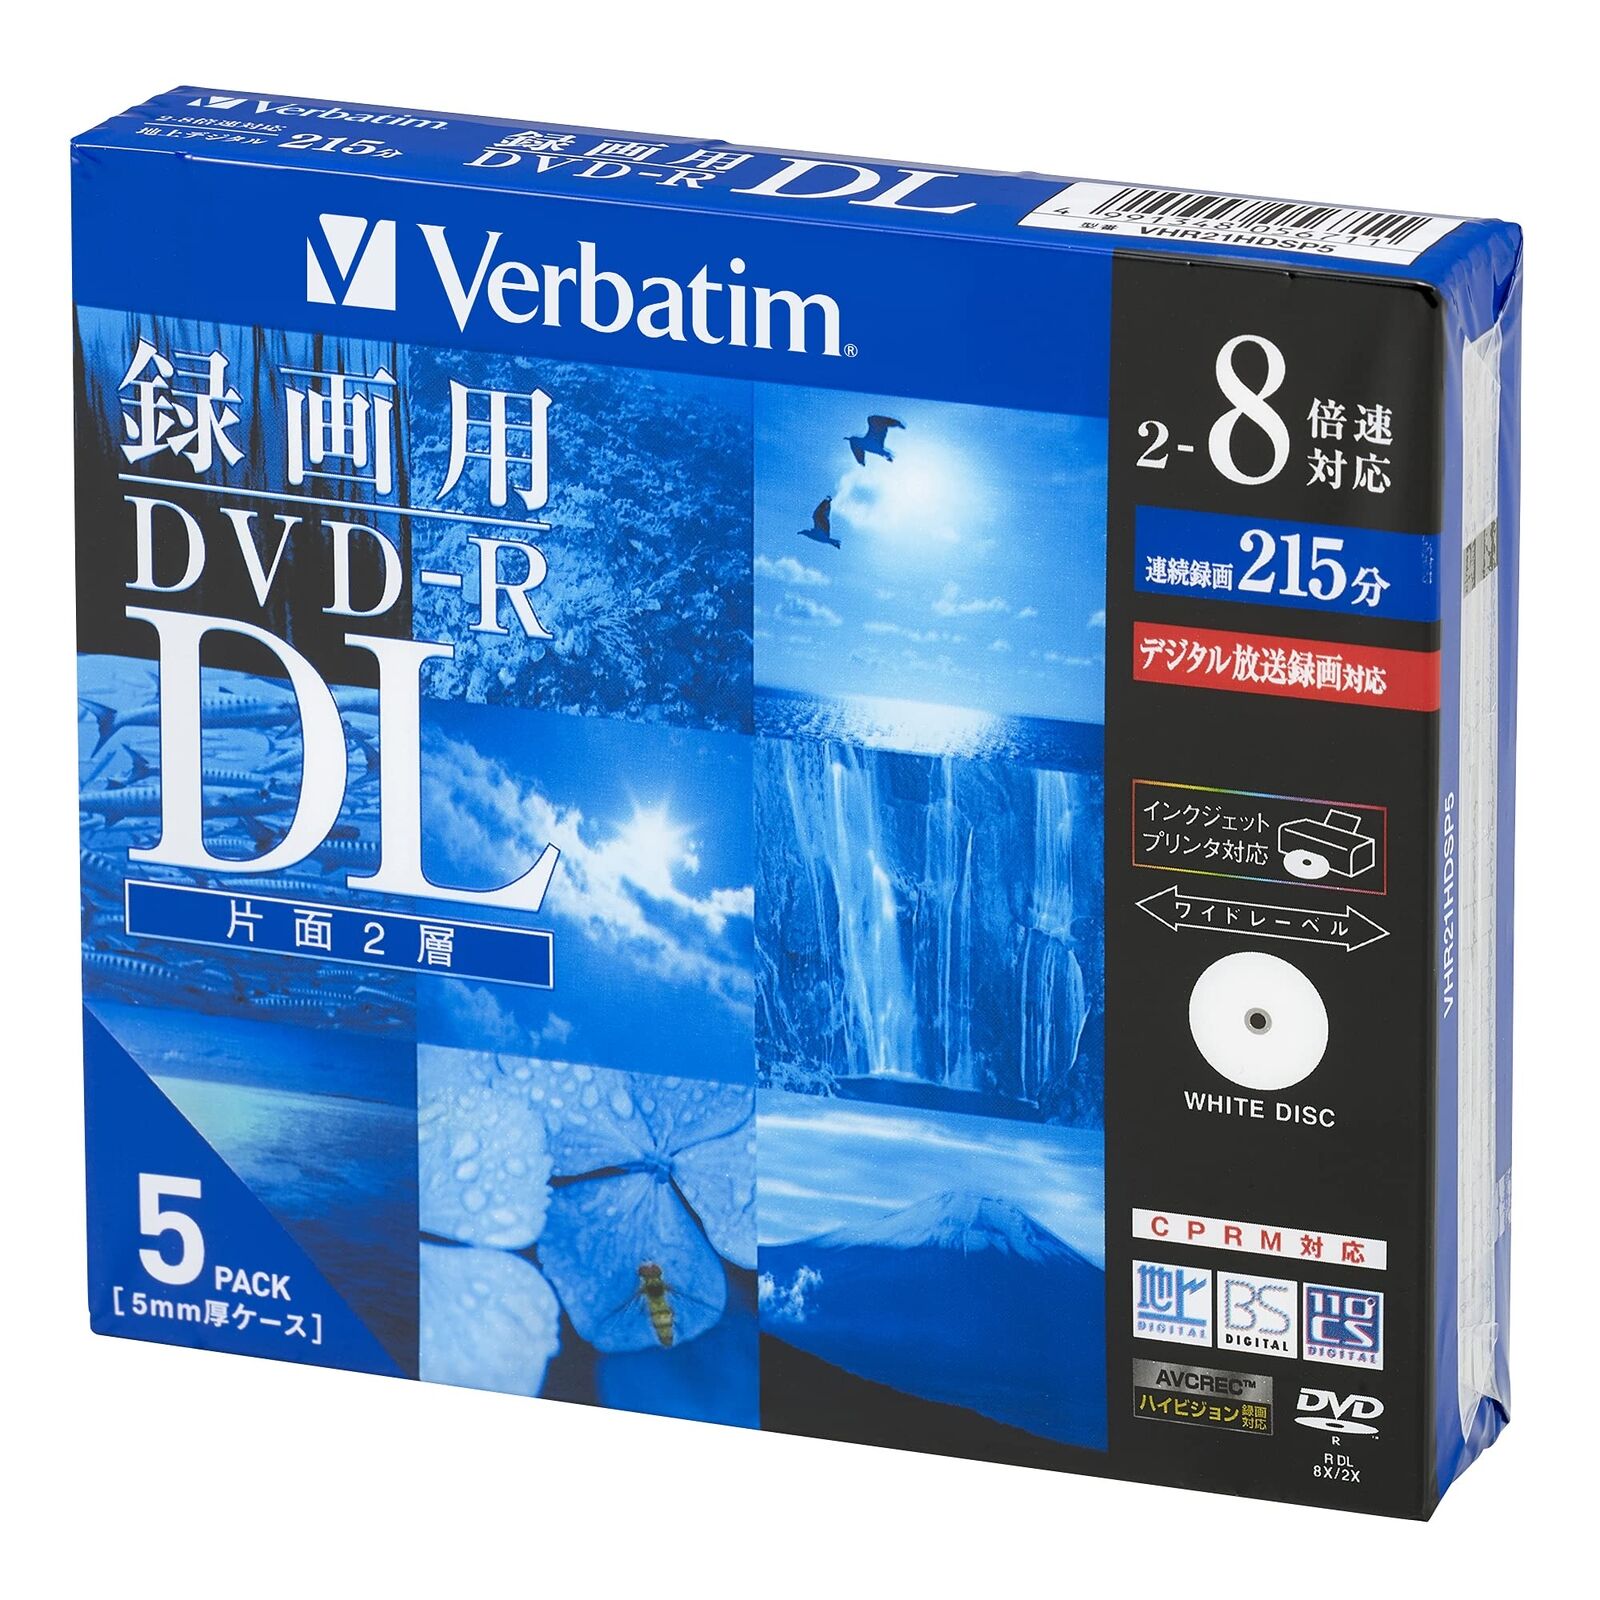 Verbatim 1 time recording DVD-R DL CPRM 215 minutes 5pcs VHR21HDSP5